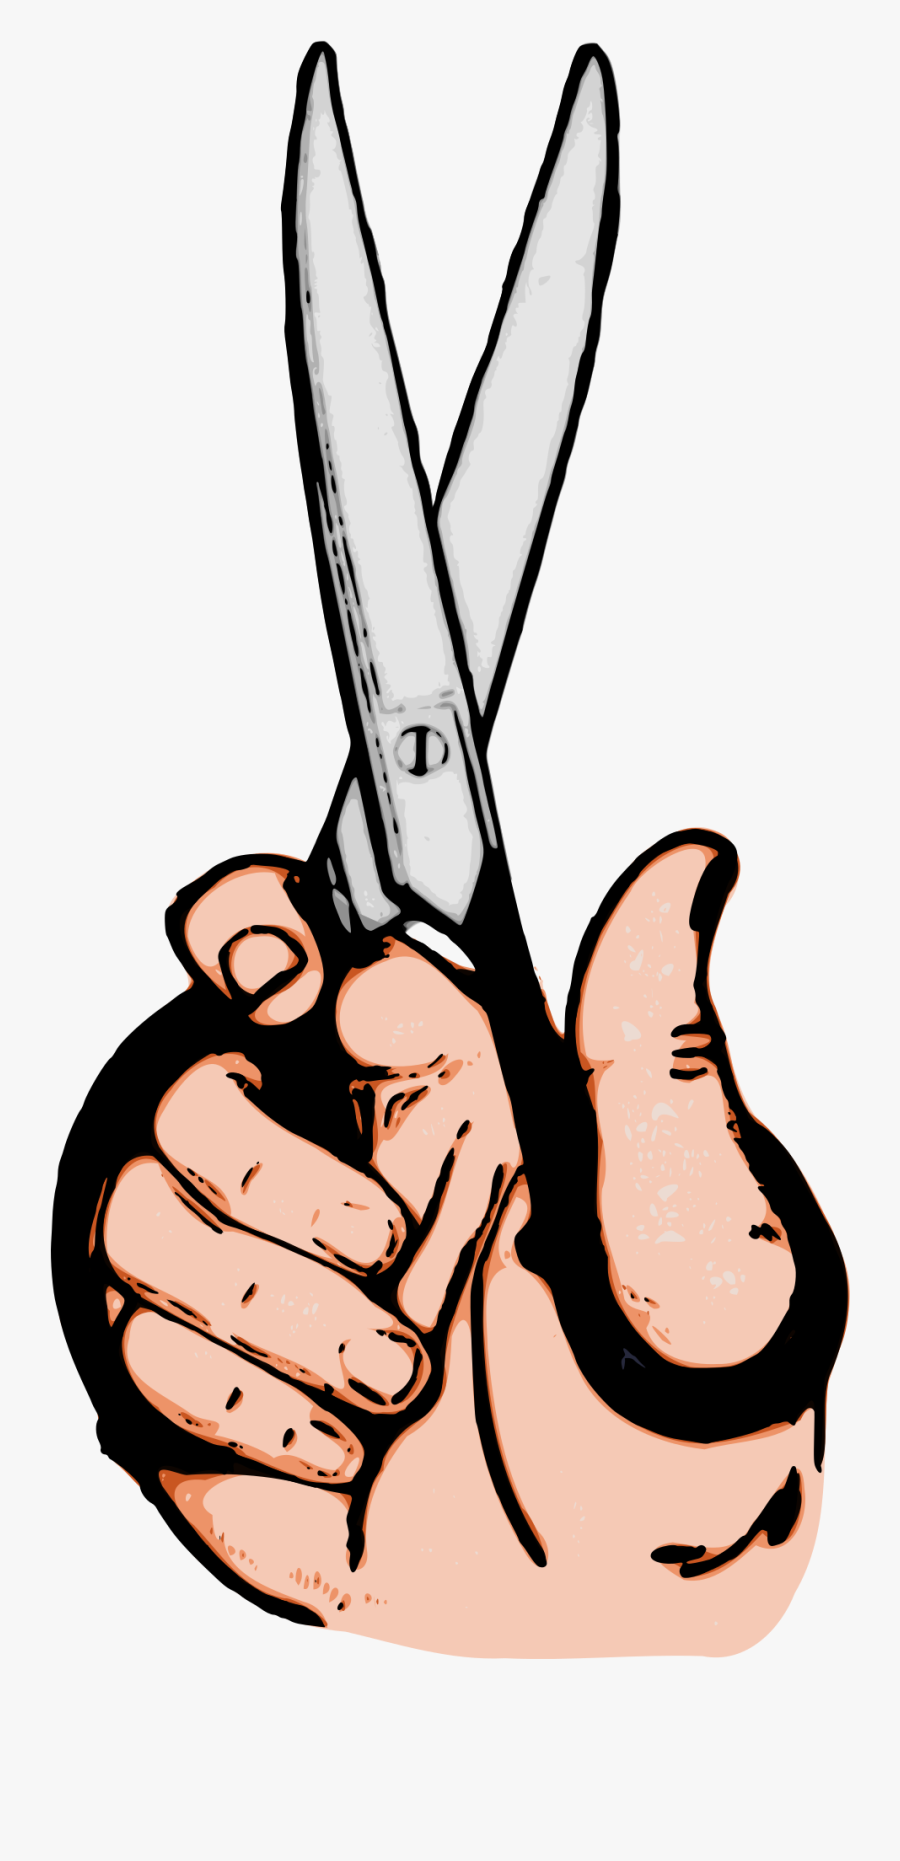 Scissors And Hand - Scissors In Hand Clipart, Transparent Clipart